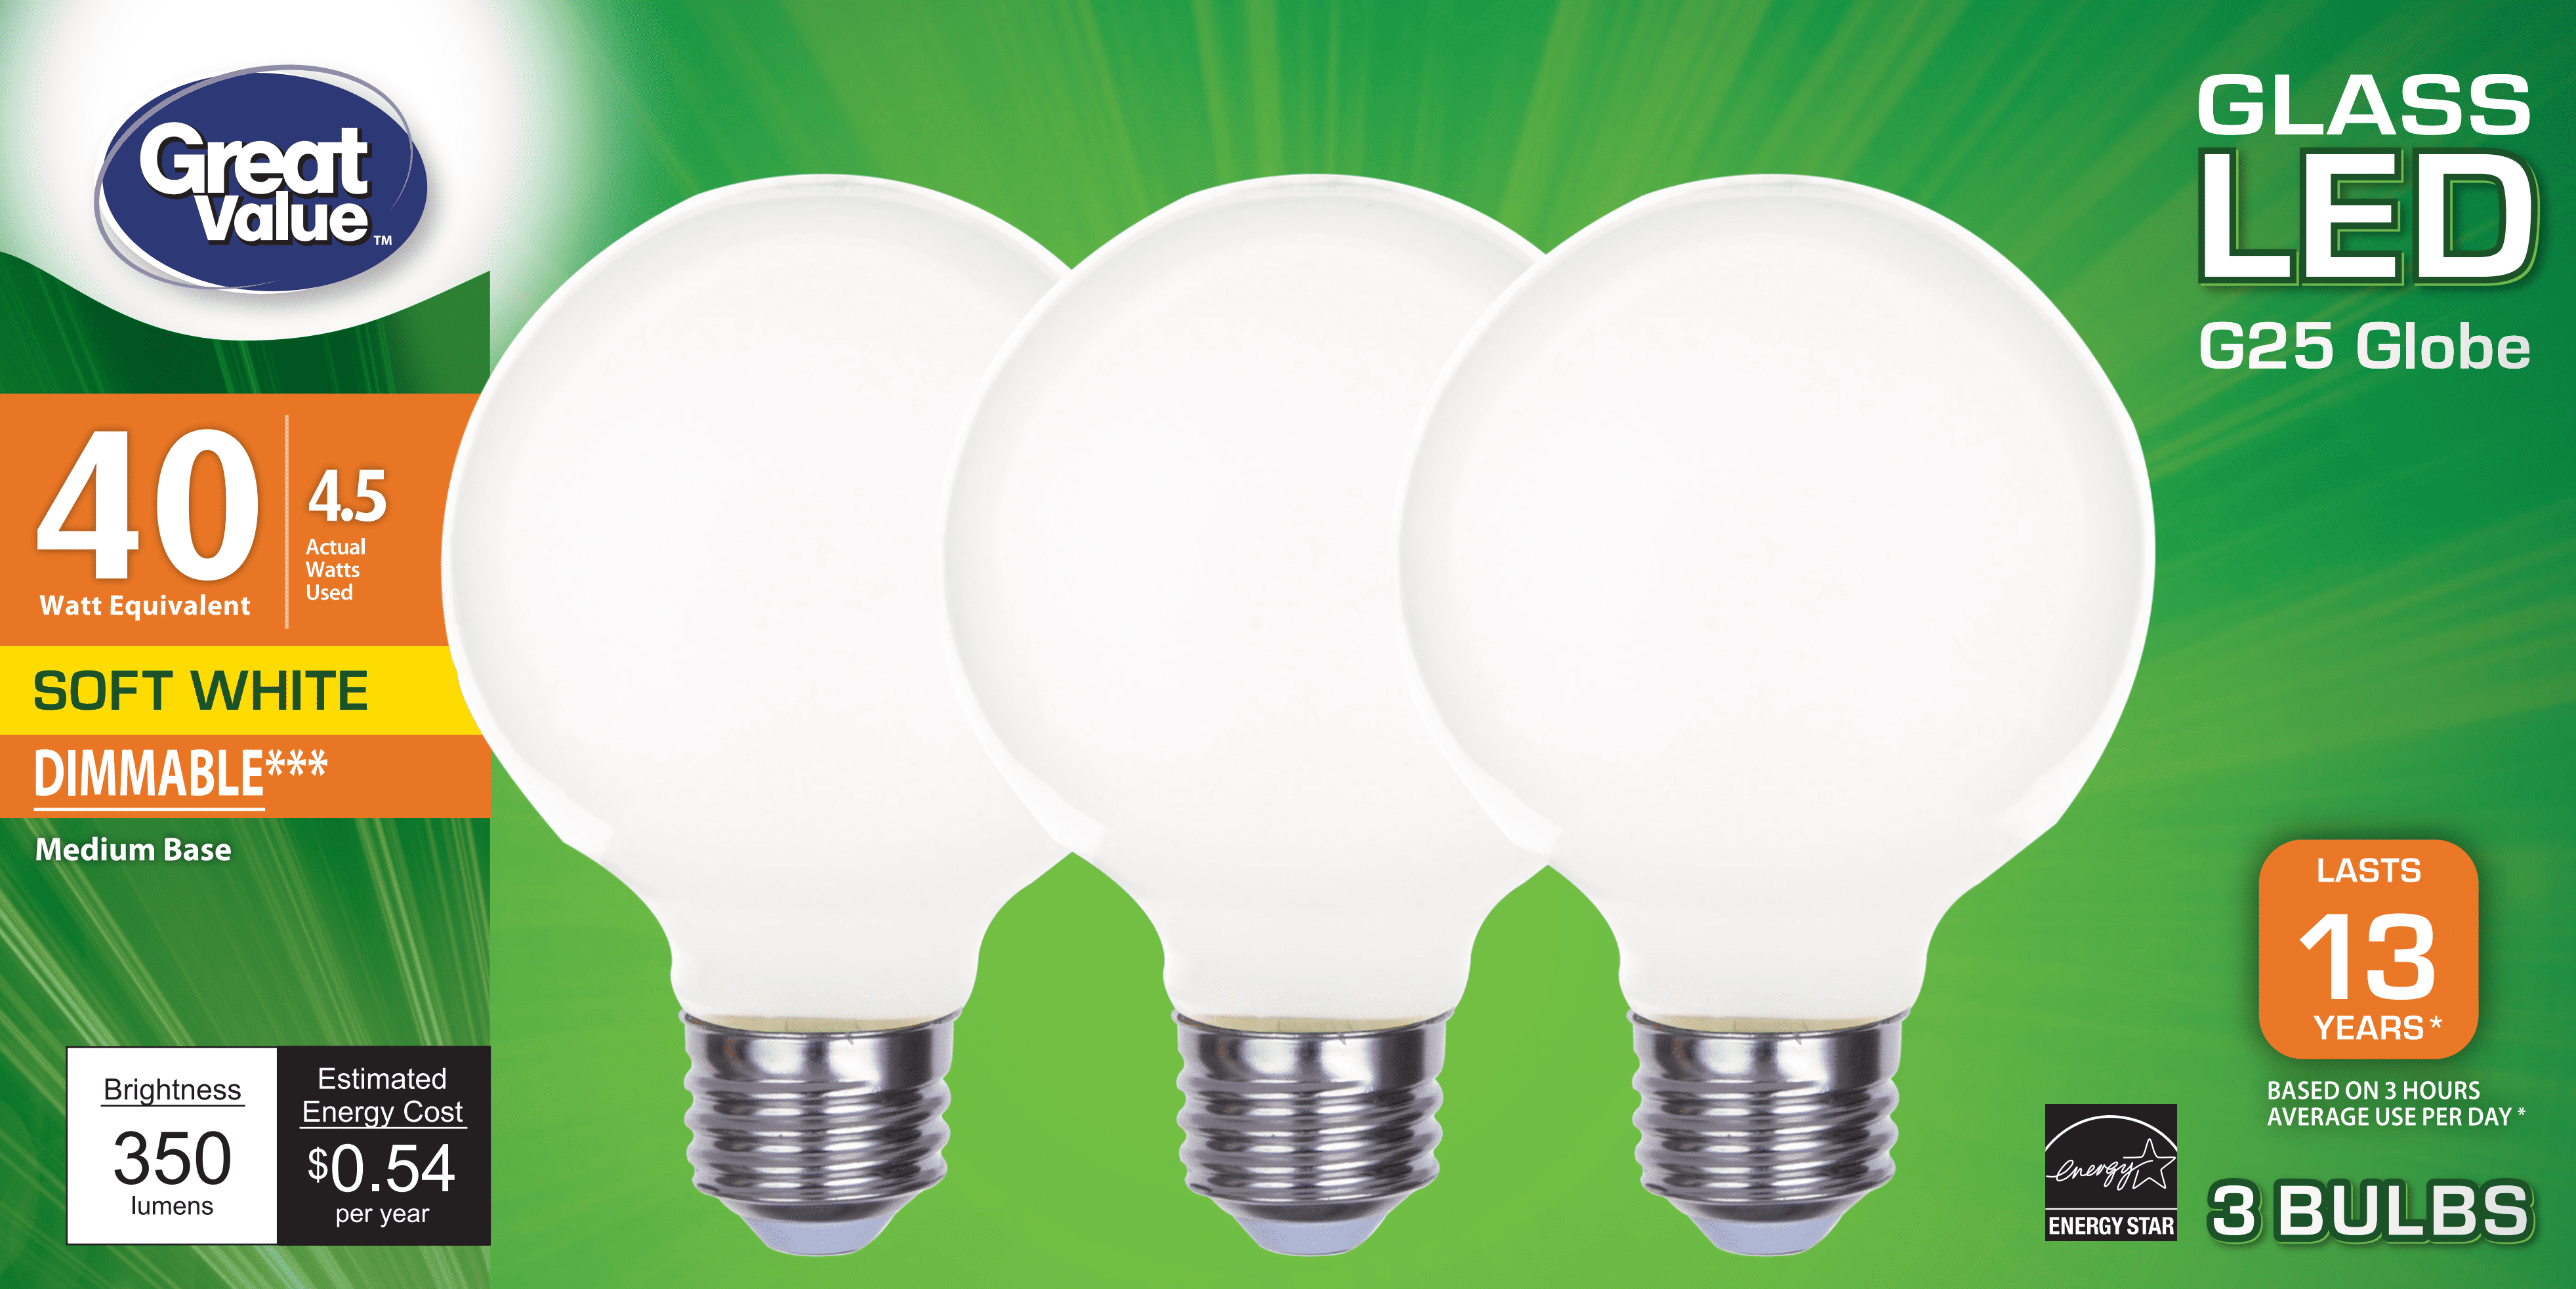 The Great Value Of 6 x 40 watts R50 Spotlights Bulbs is Energy Class E 